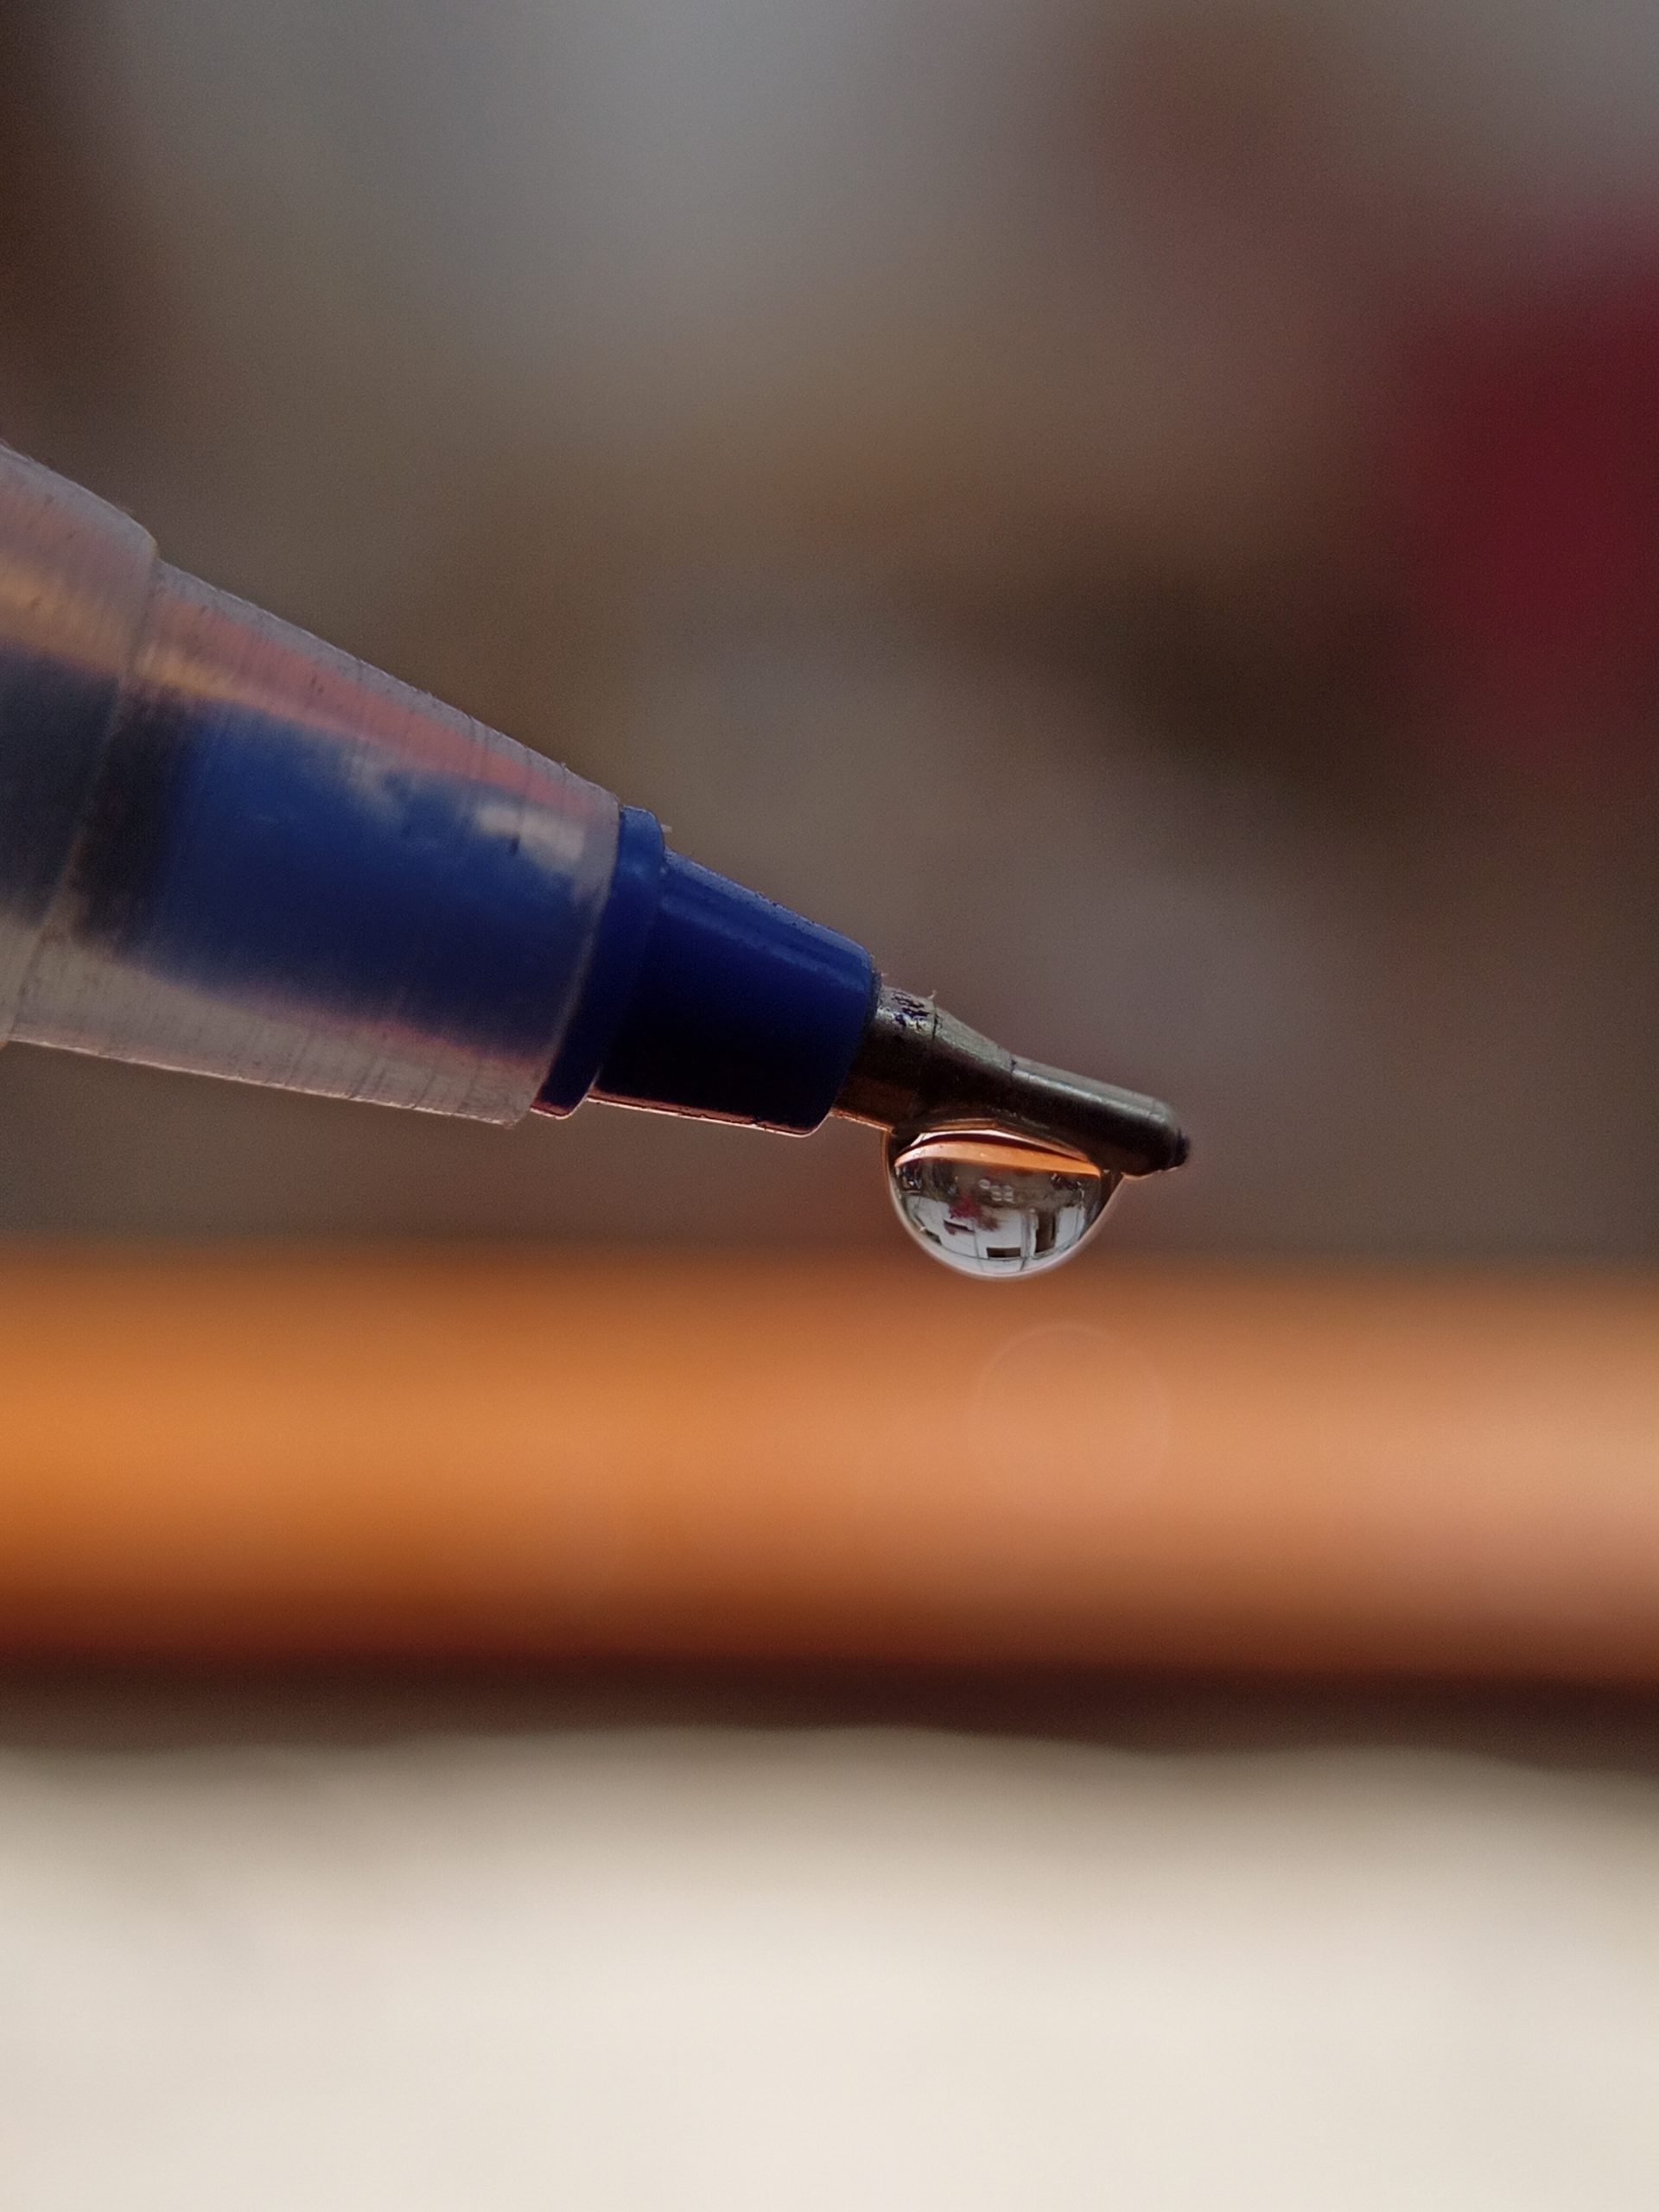 Waterdrop on pen nib